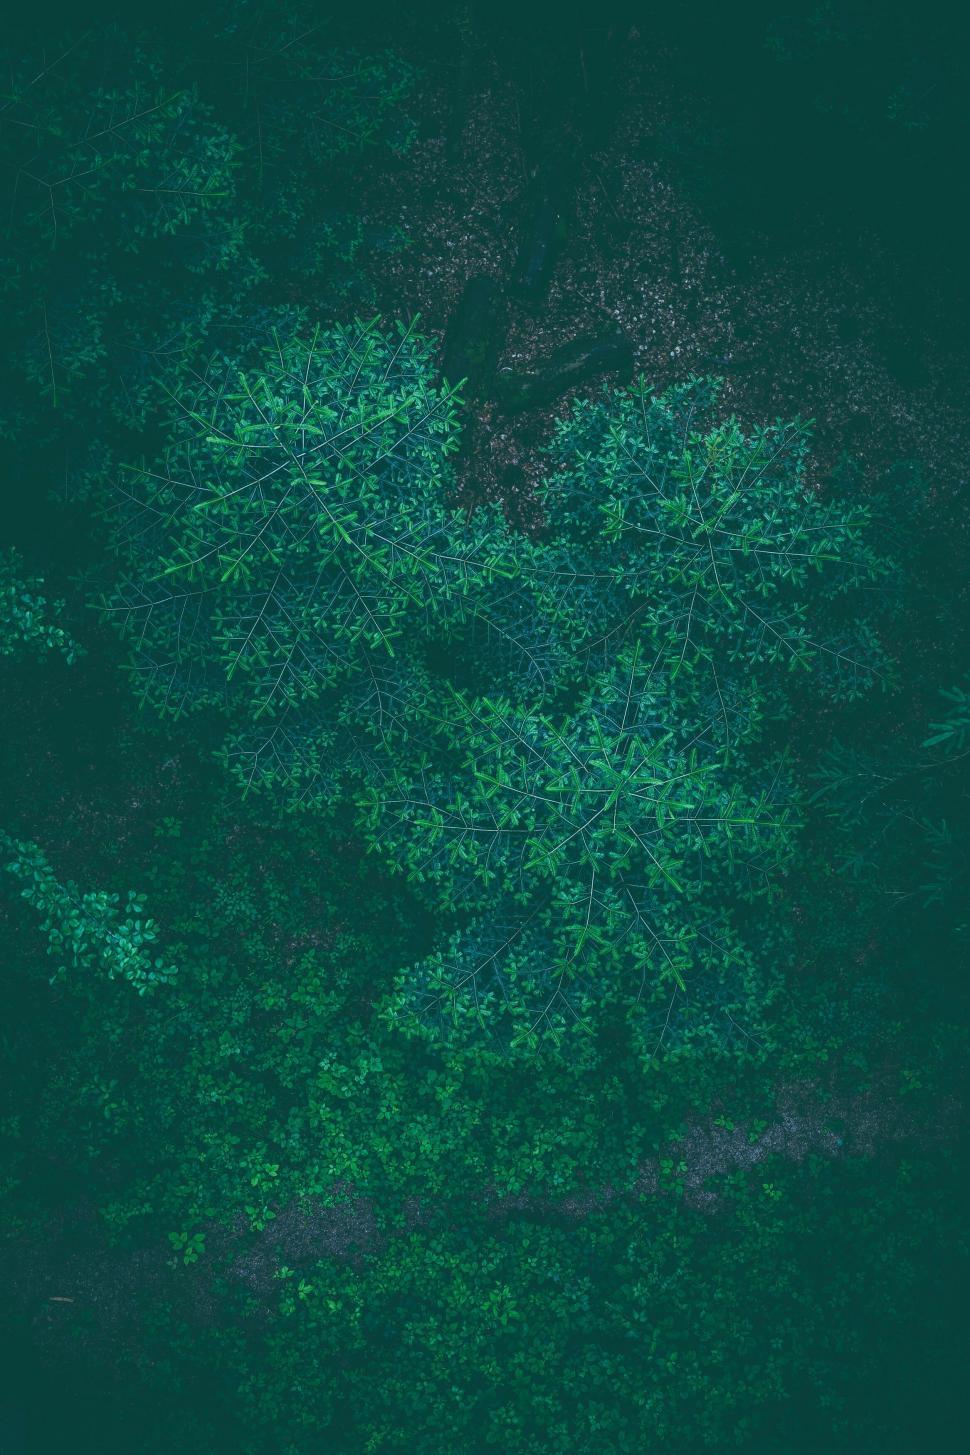 Free Image of Dense green foliage in darkened ambiance 